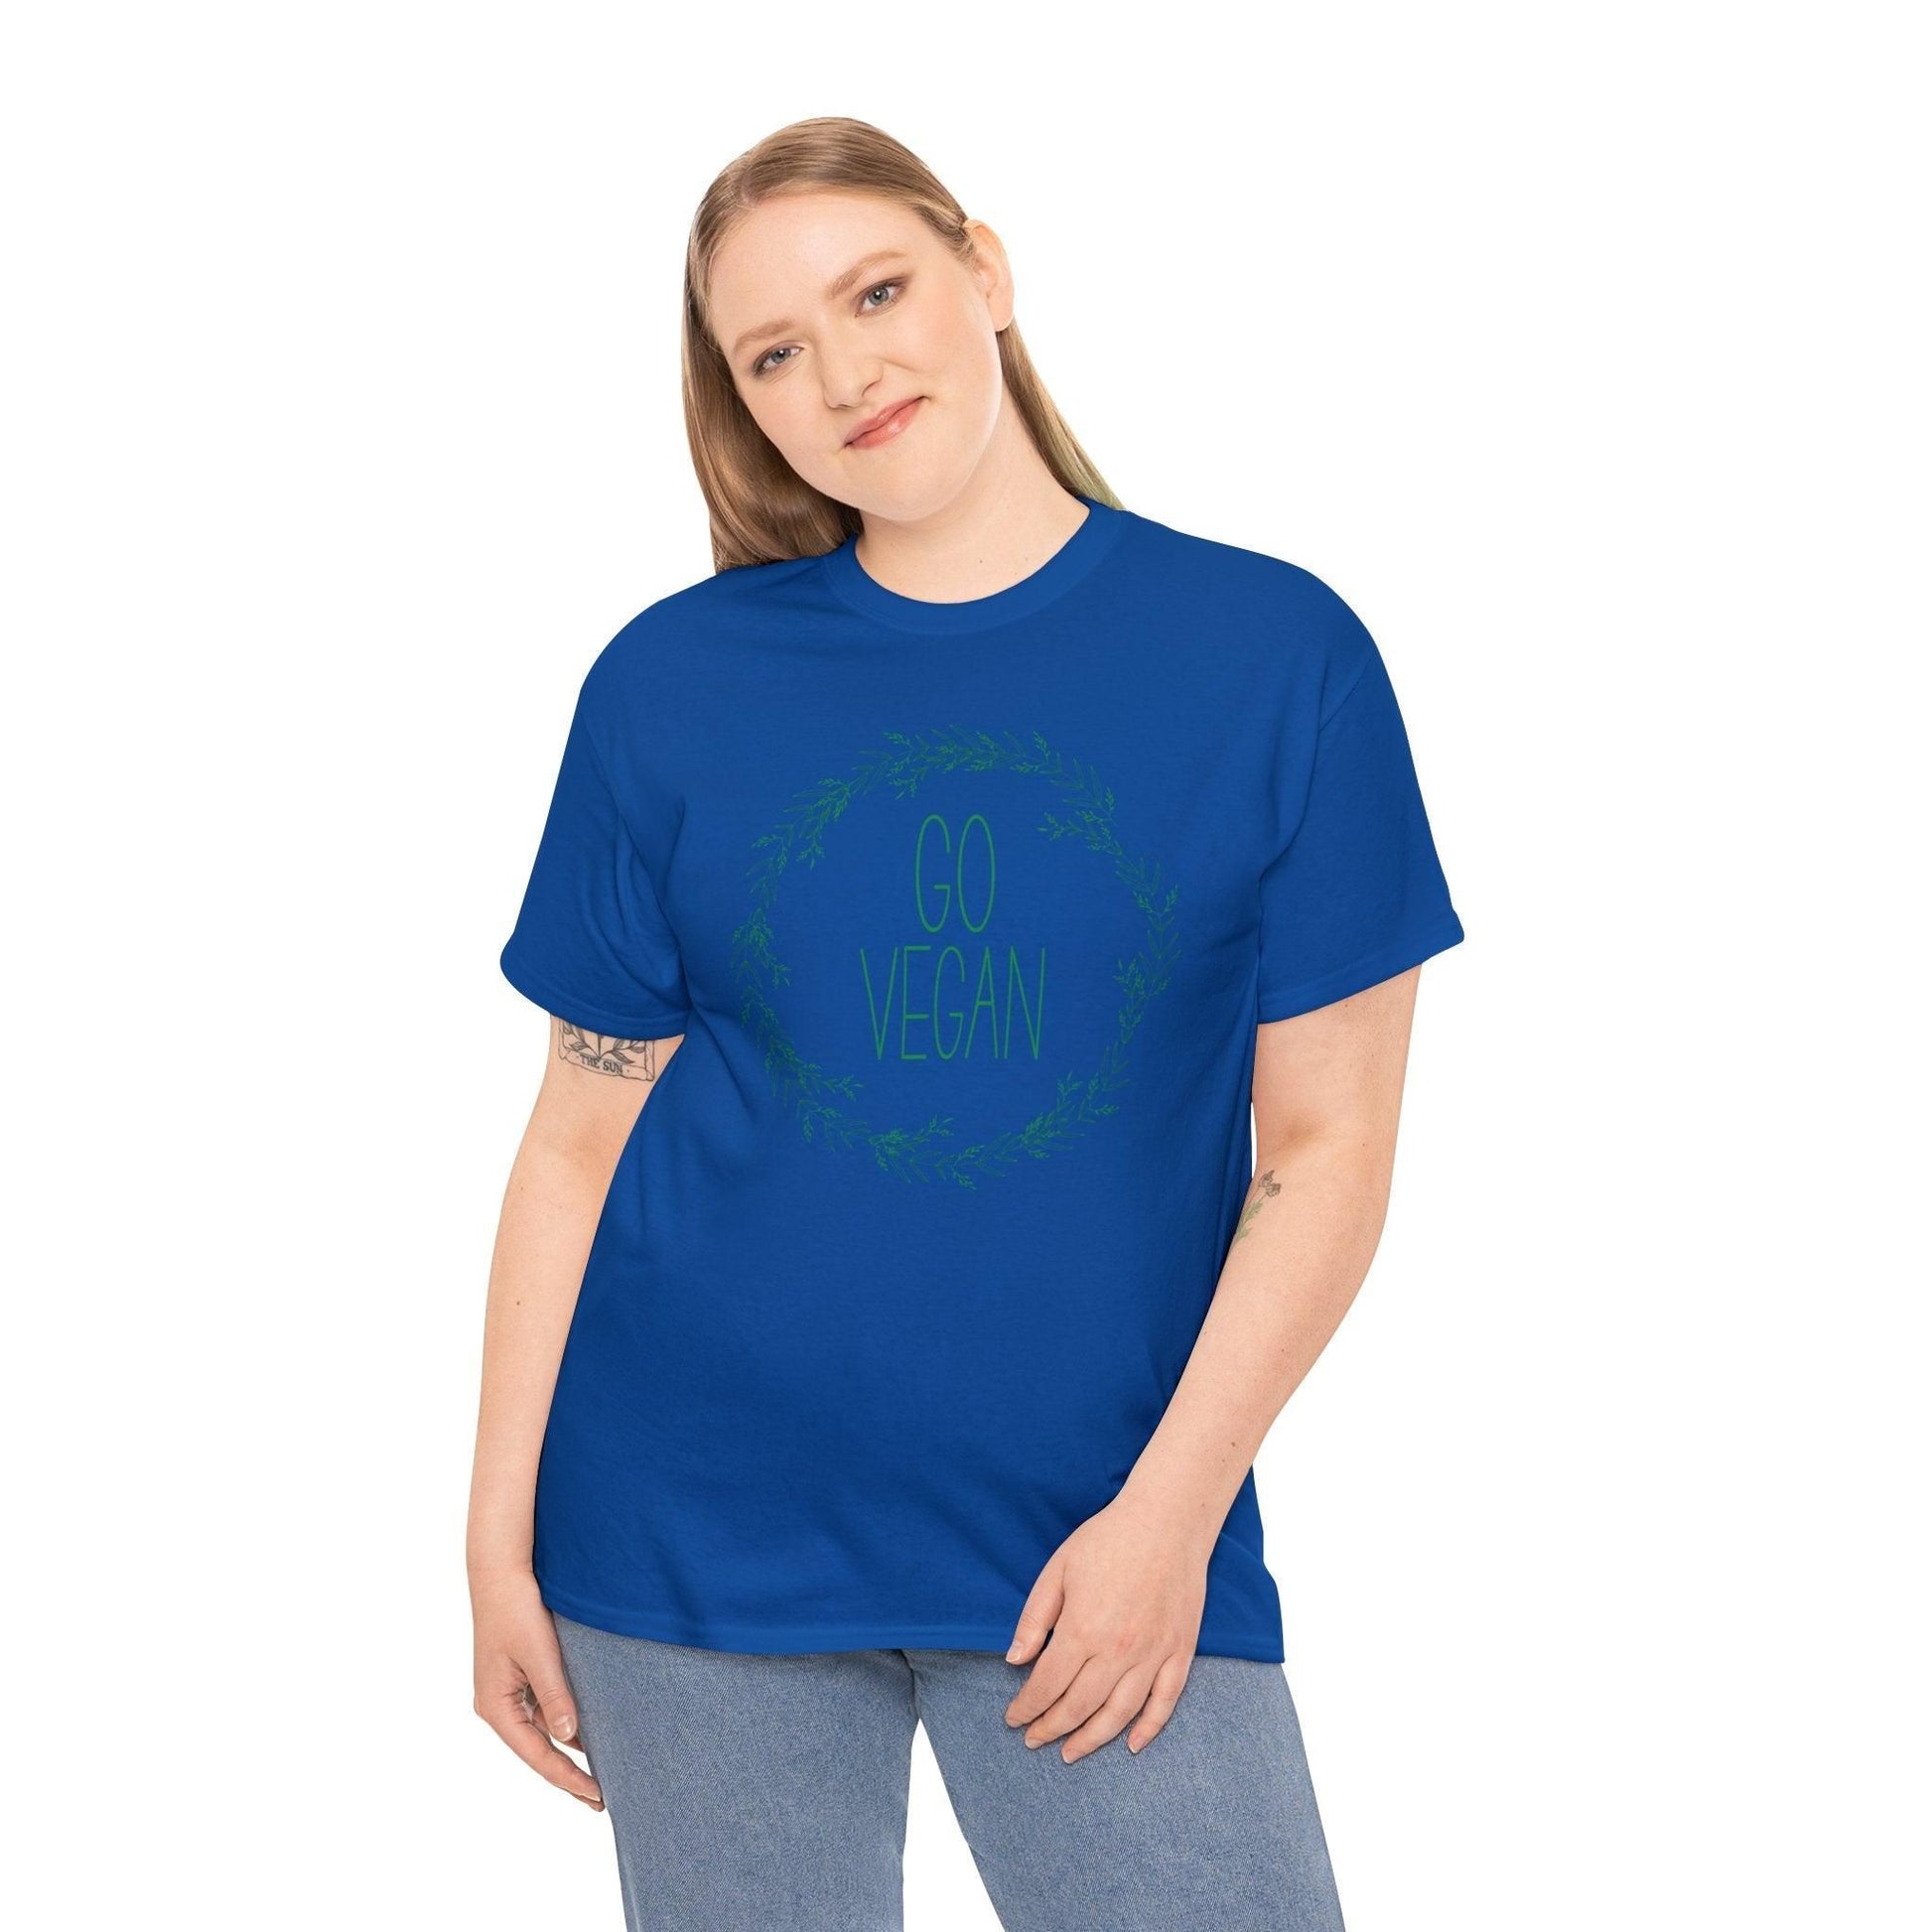 Go Vegan Unisex Tee T-Shirt   